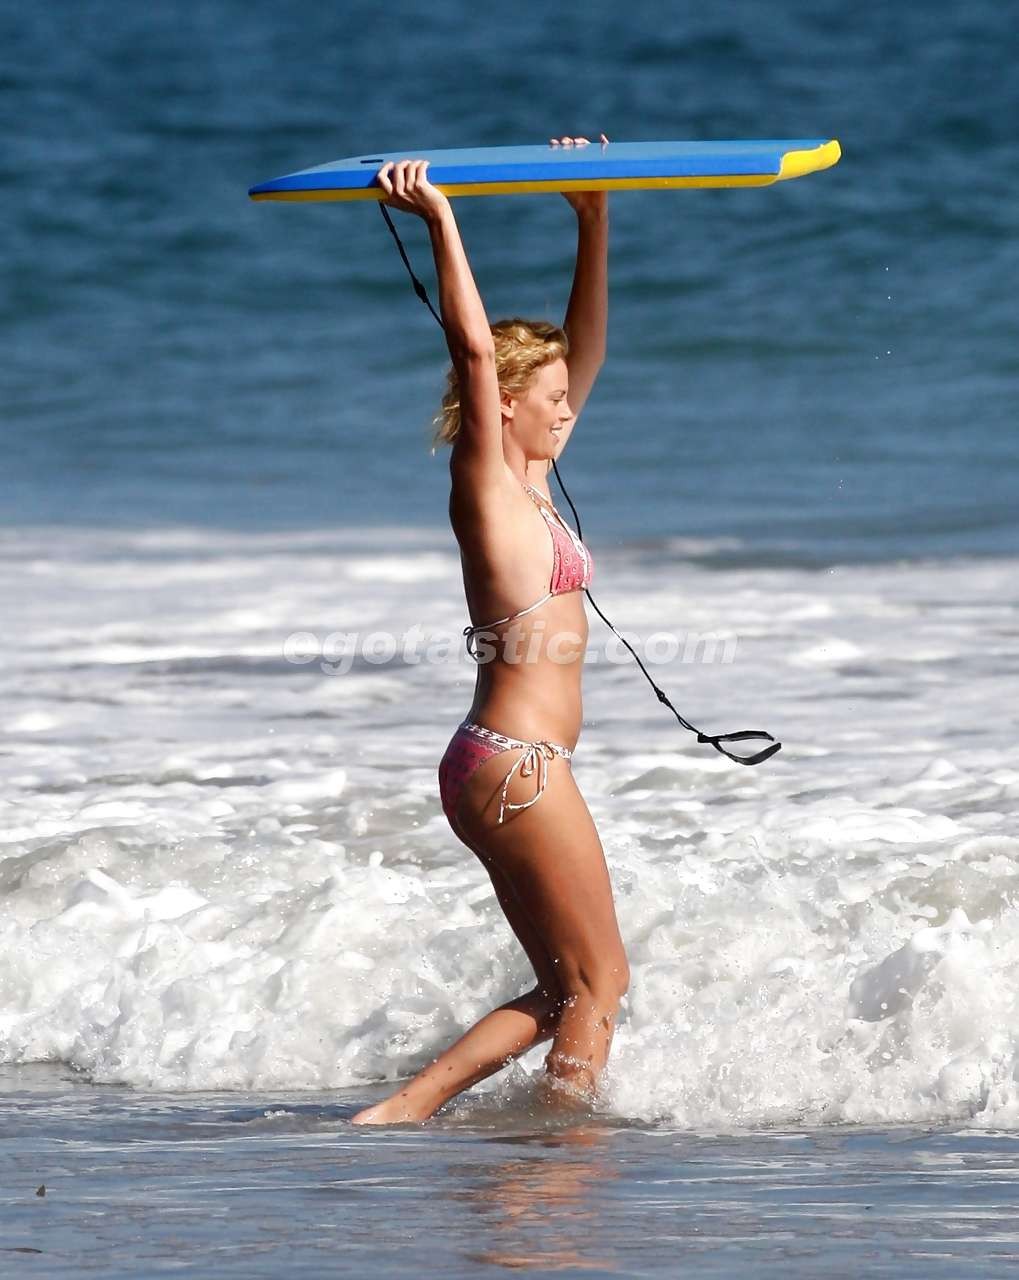 Charlize Theron enjoy playing in bikini on beach paparazzi pictures #75297135